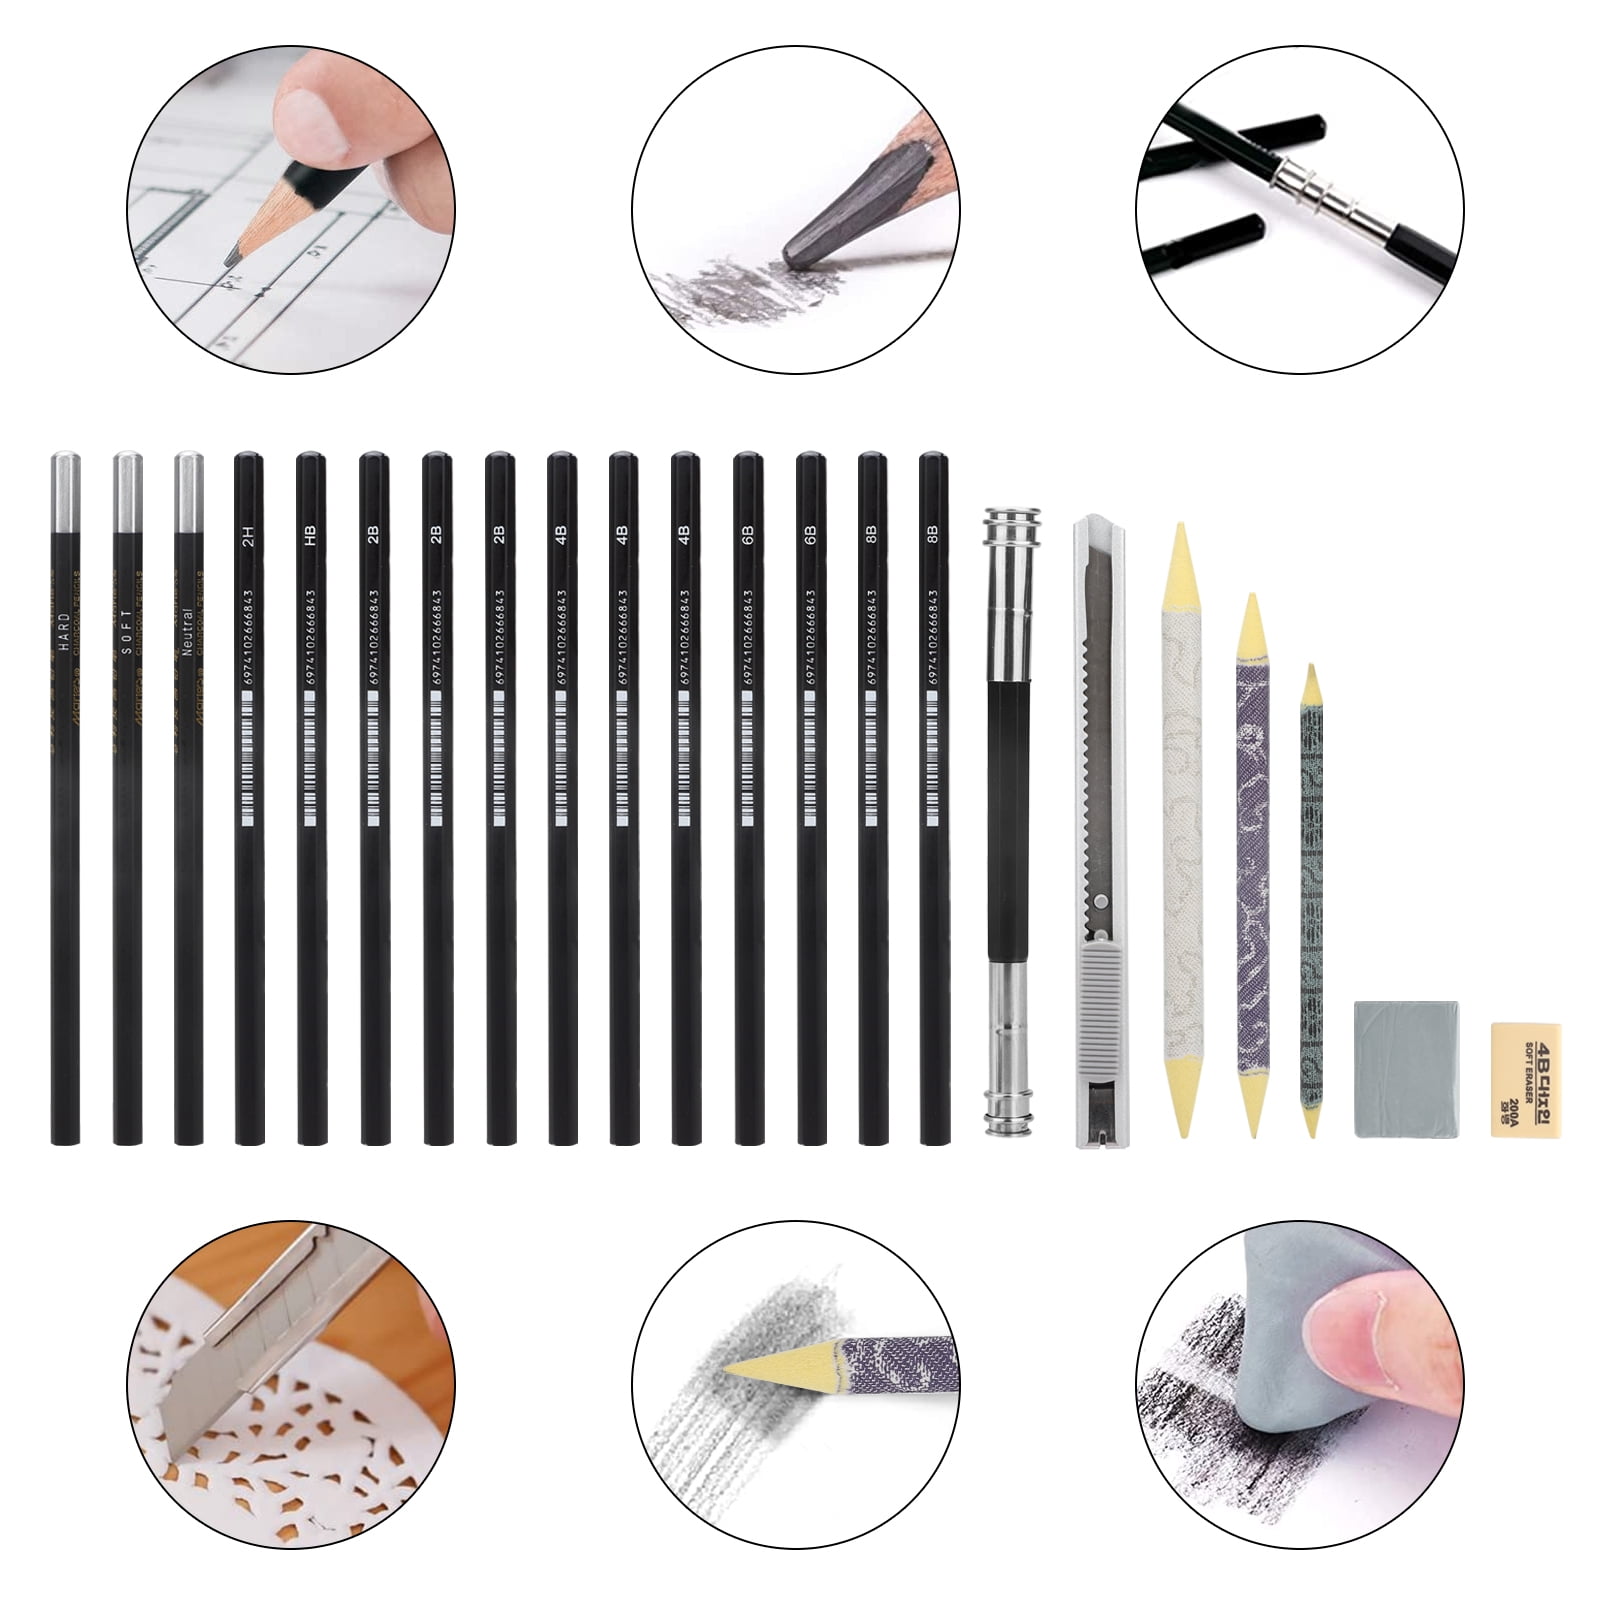 Heshengping Kit de 31 lápices de dibujo para dibujar, estuche de viaje  portátil para artistas, incluye grafito, carbón, lápiz de color blanco,  tocón